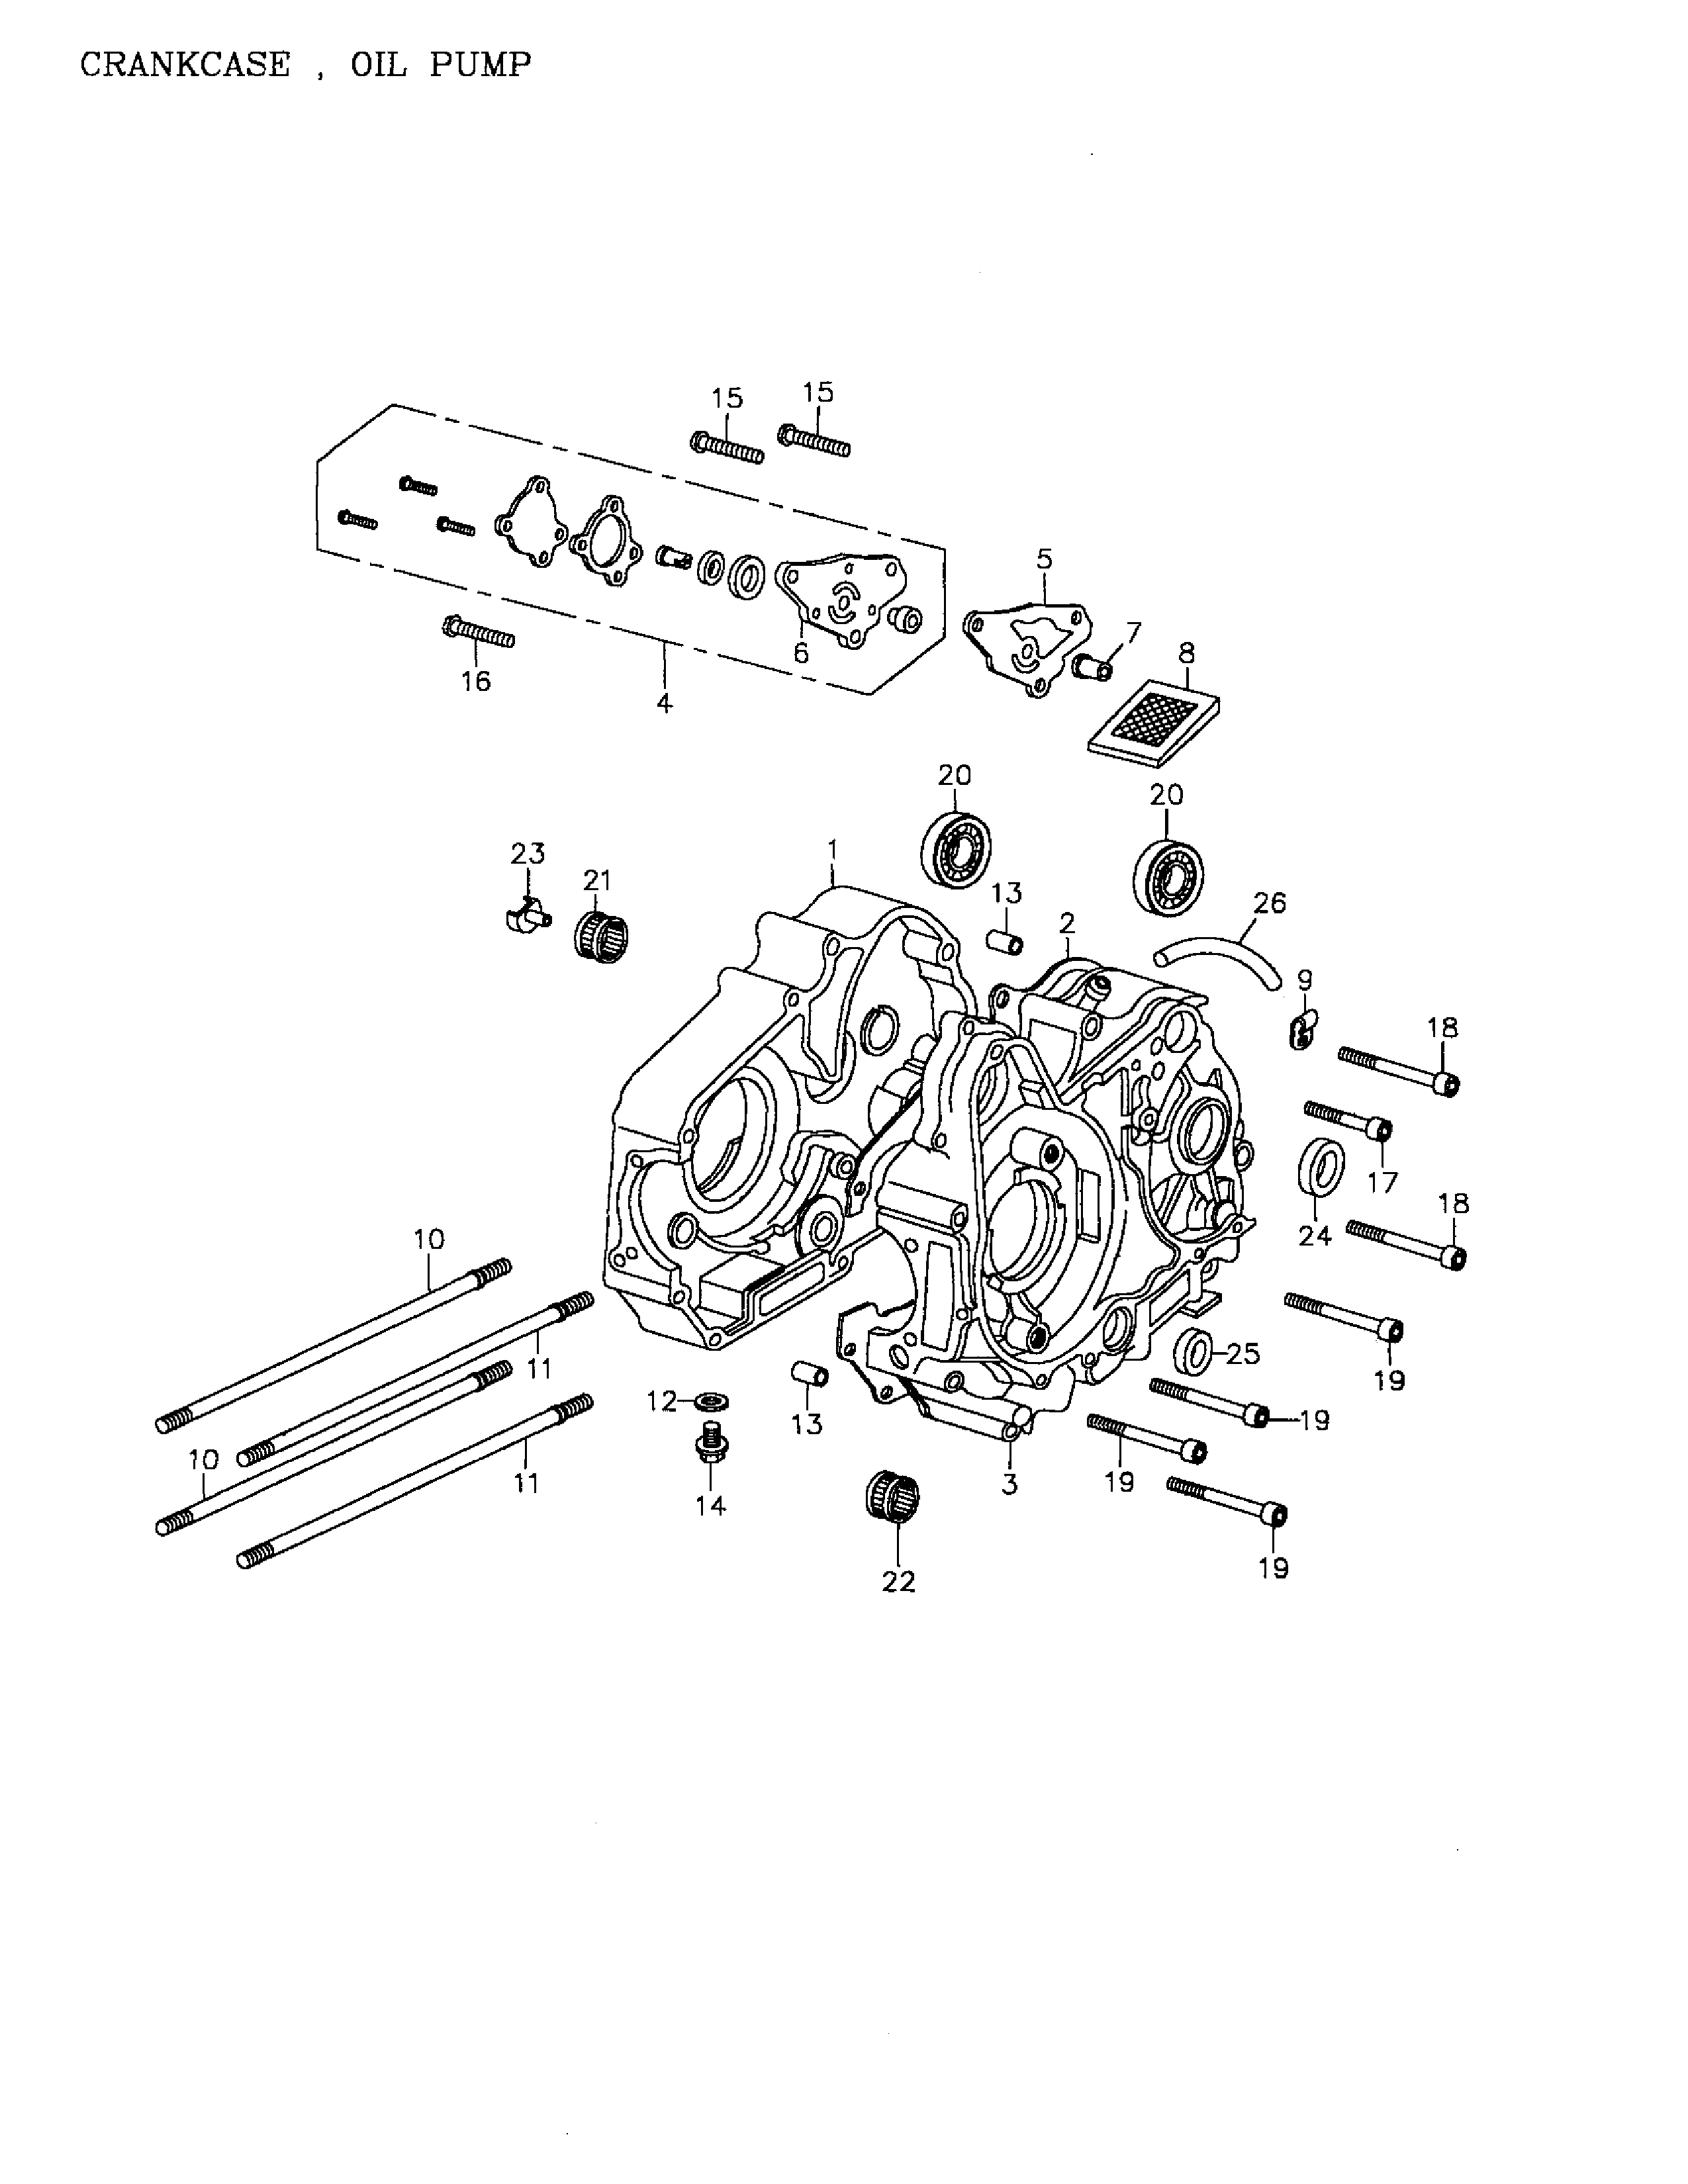 Crankcase, Oil Pump